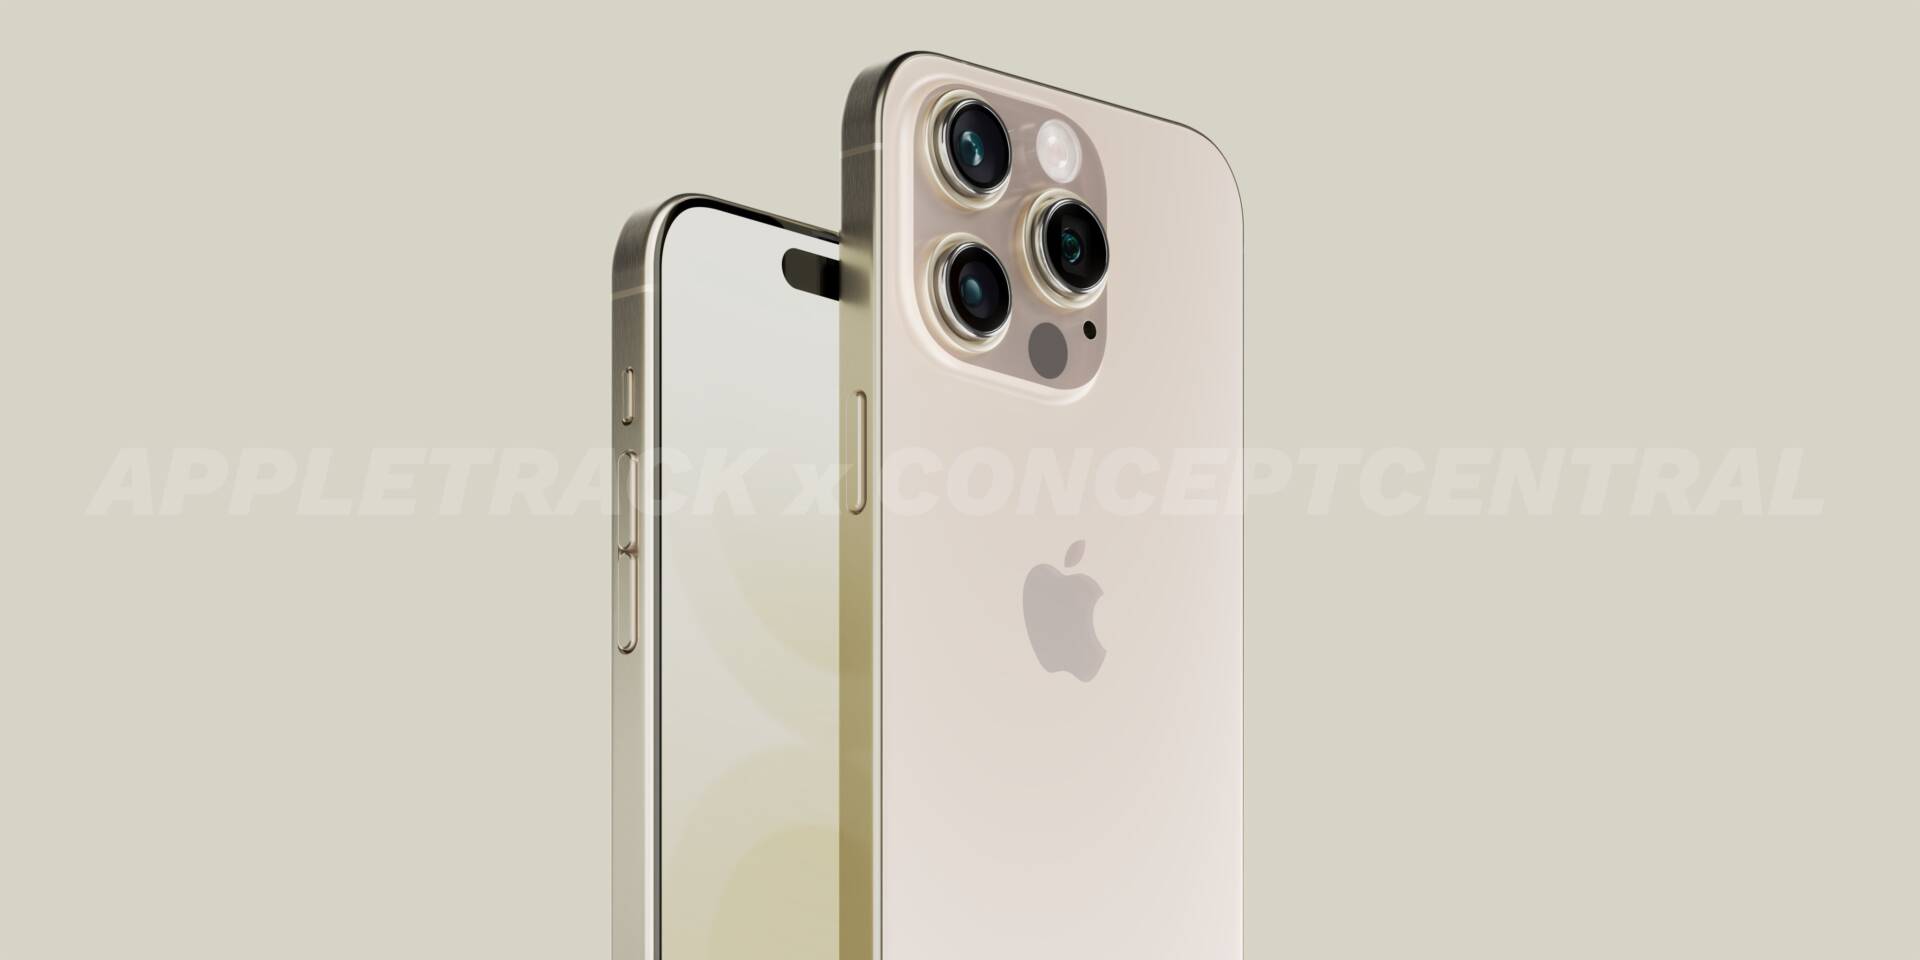 iPhone 15 Pro 2023